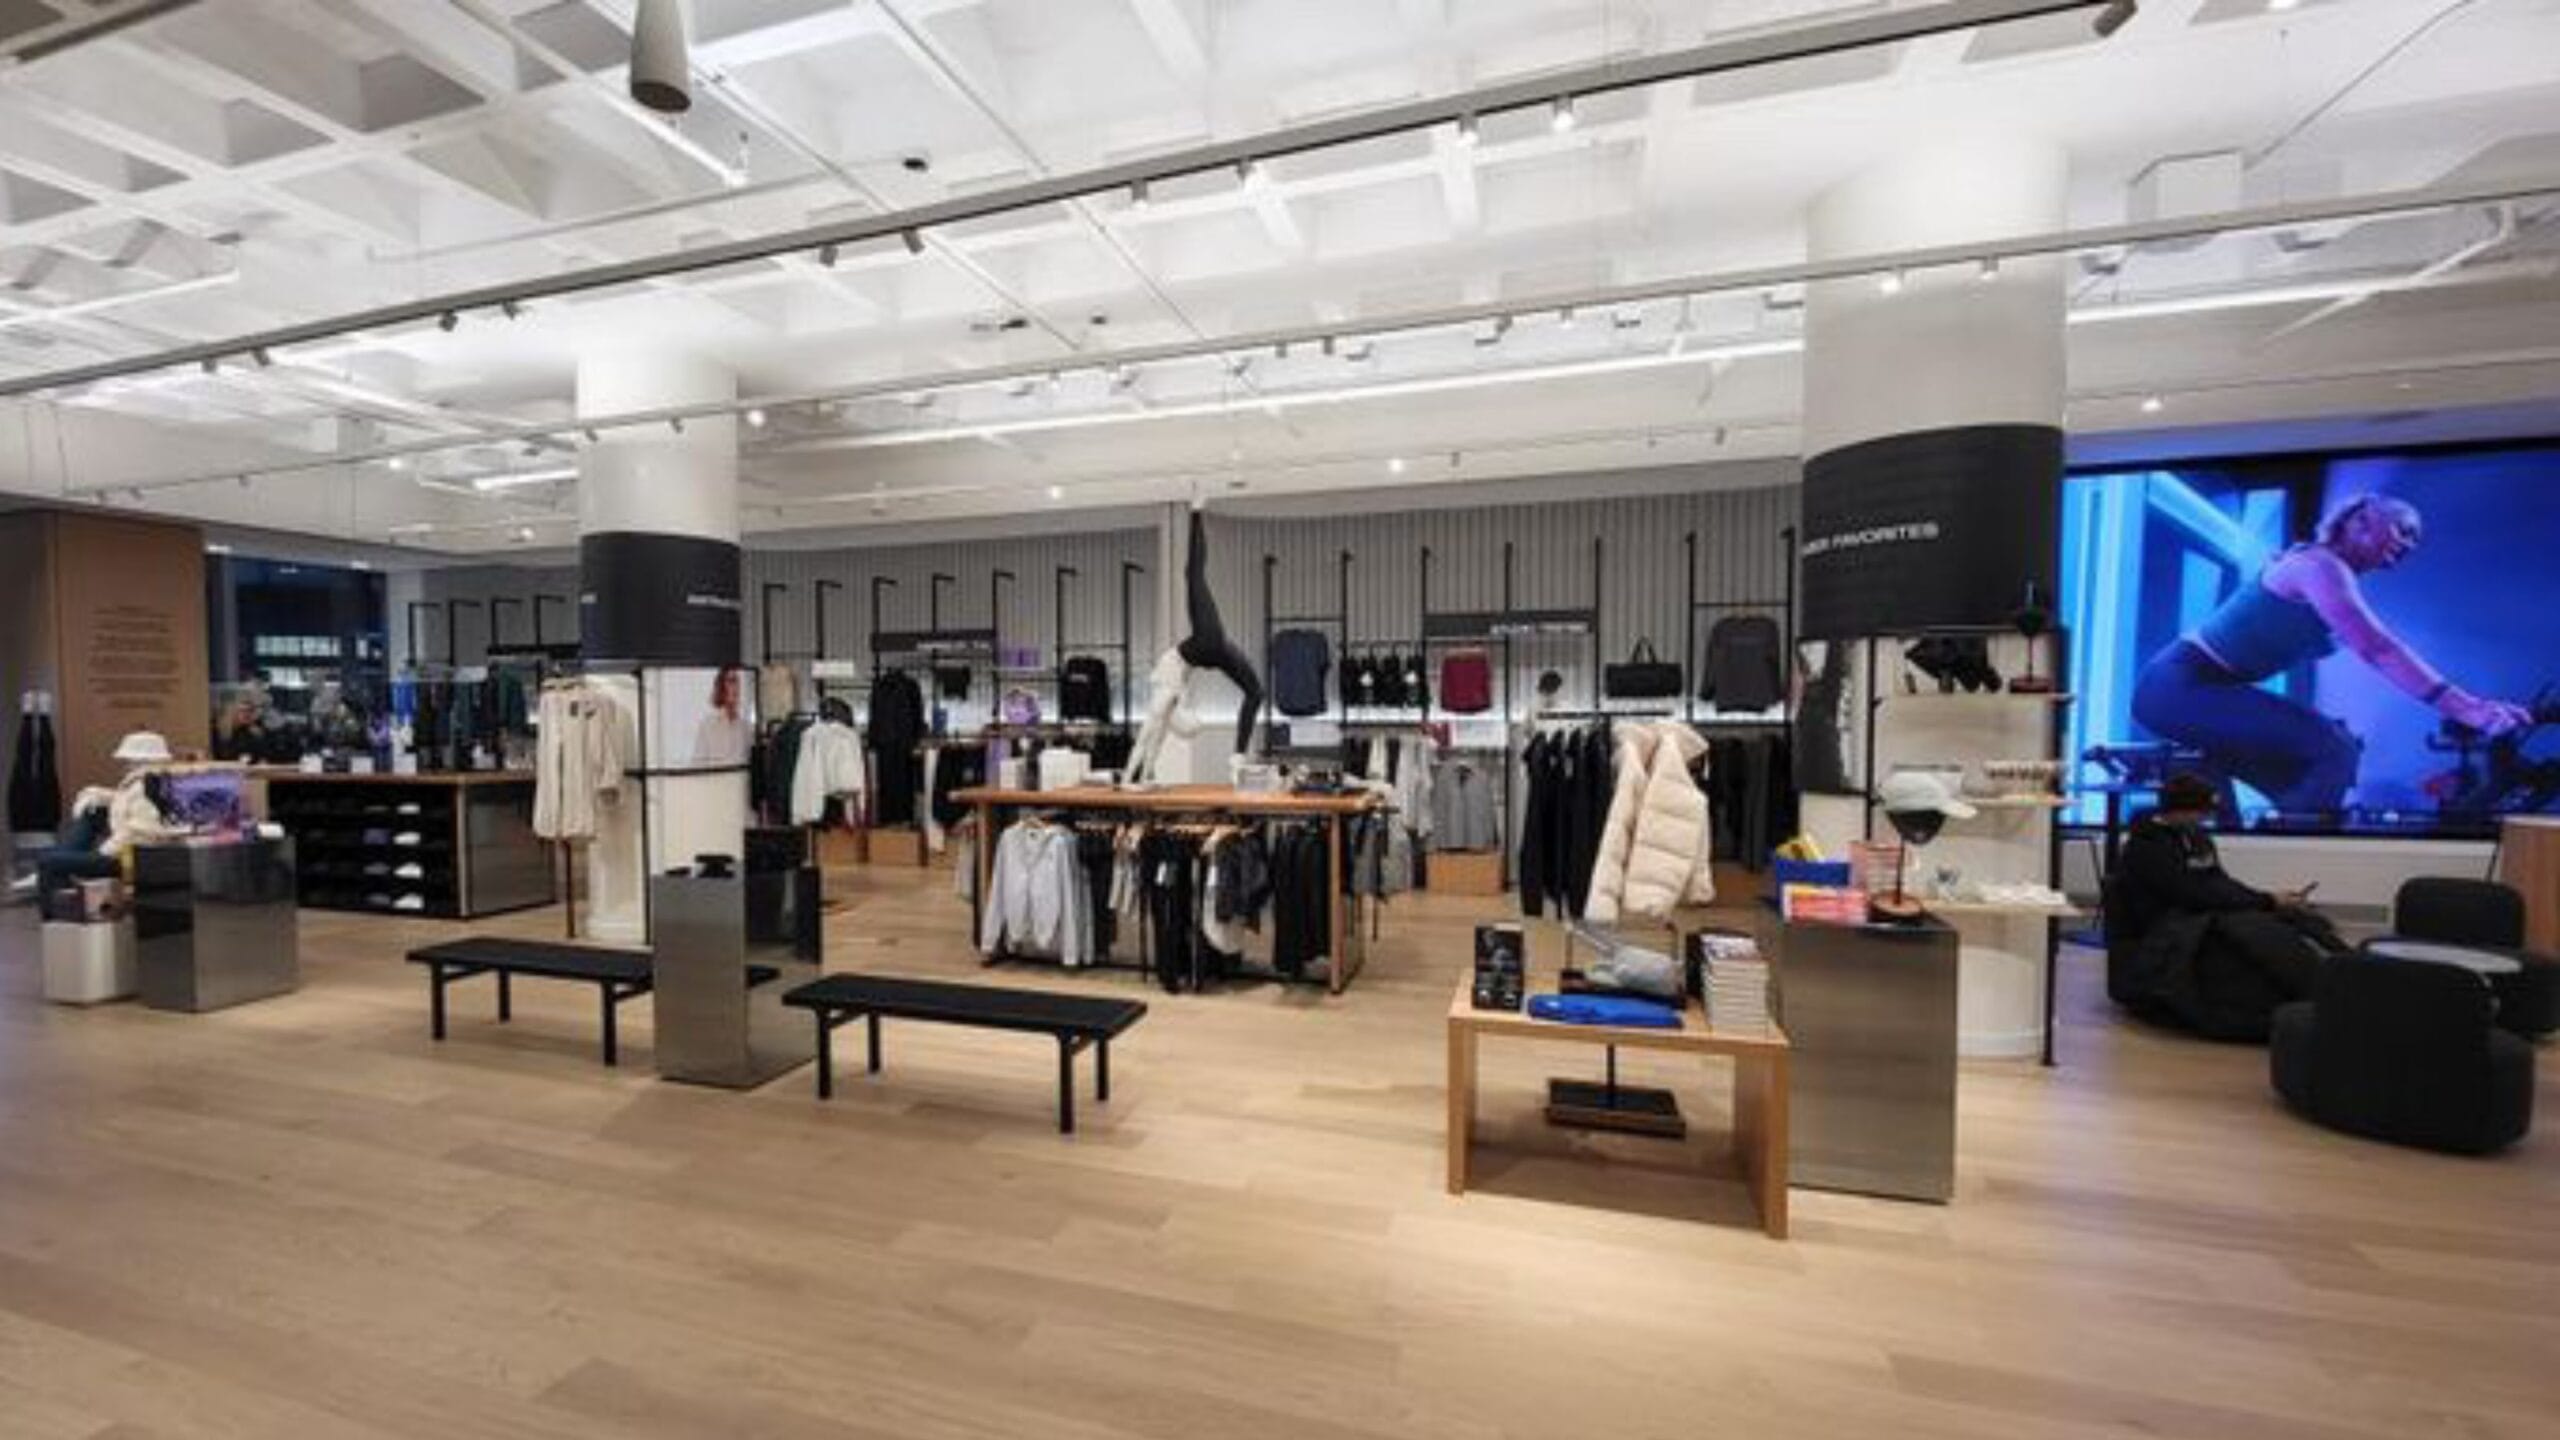 New retail store area at Peloton Studios New York (PSNY). Image credit @wickedsmahtzone